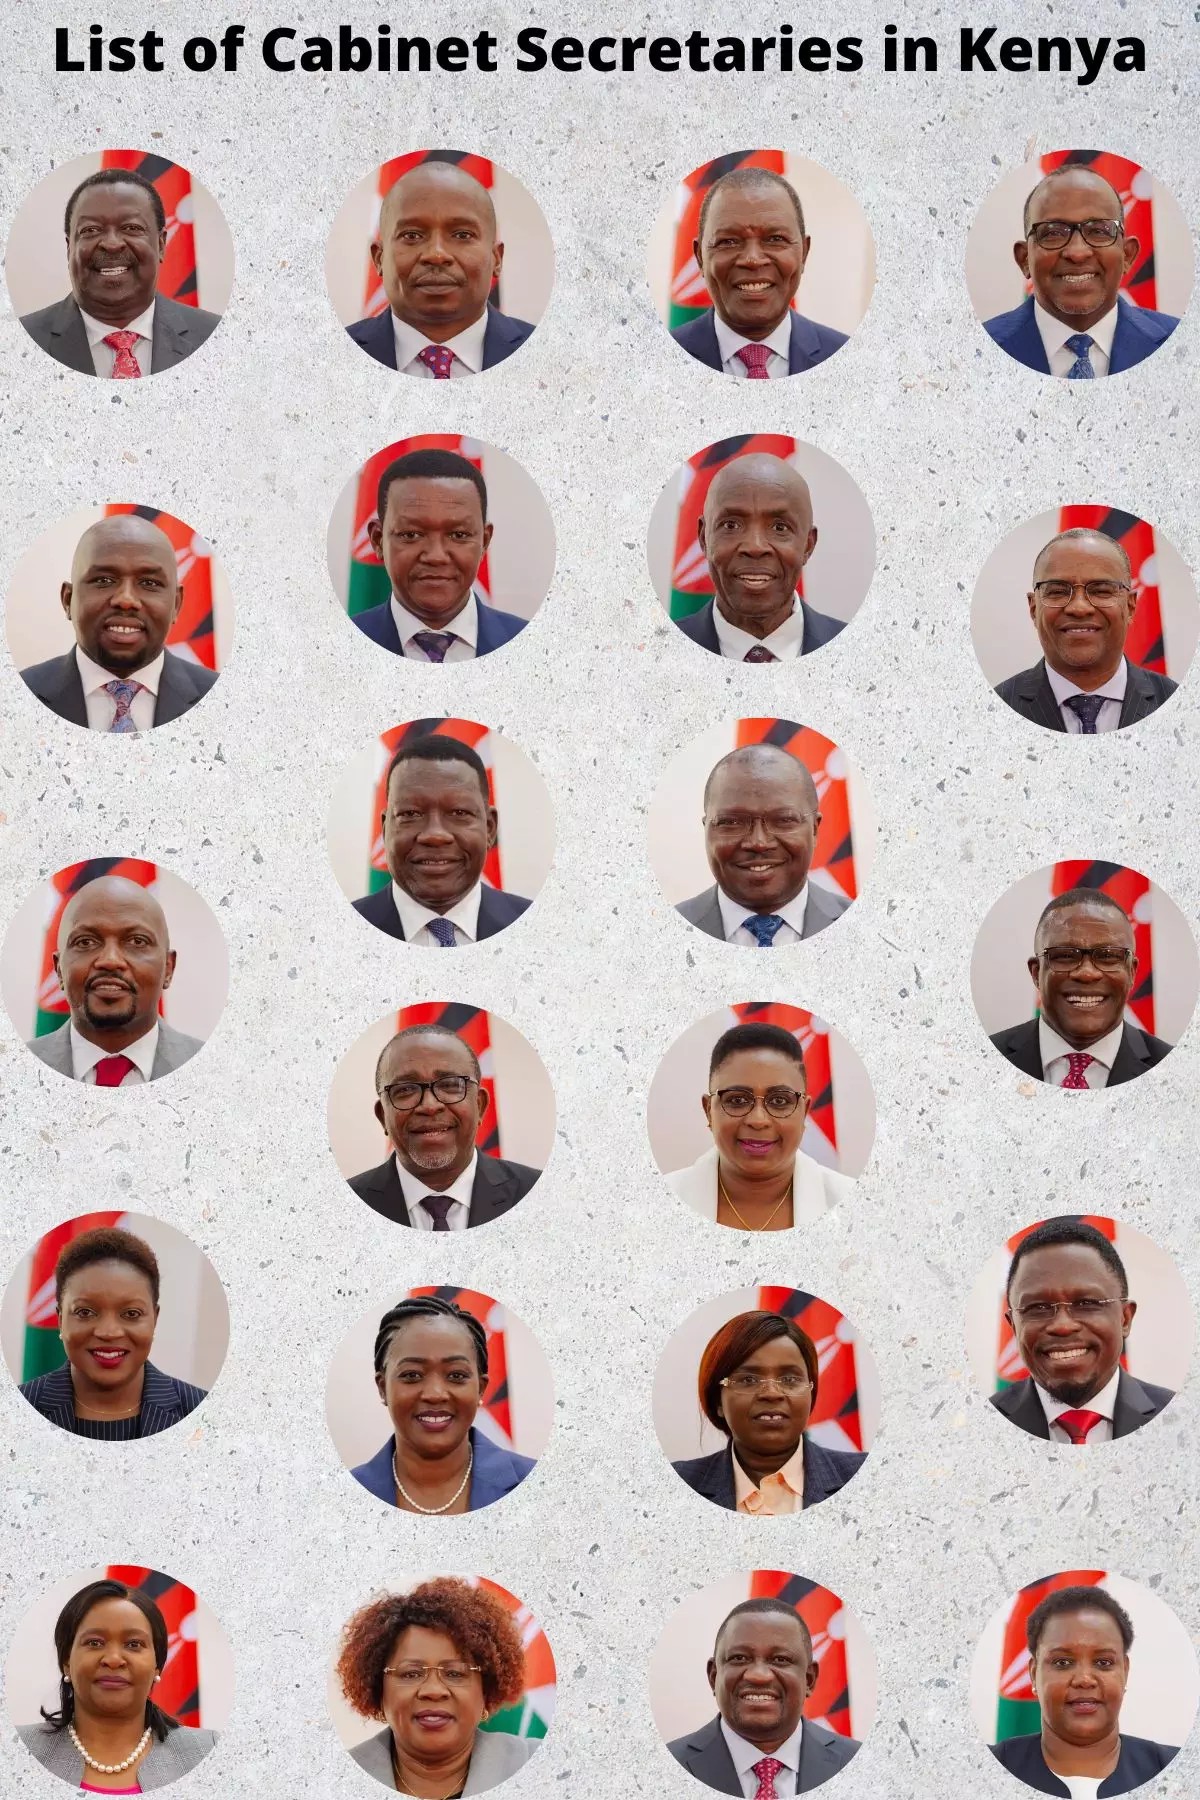 Full List Of Current Cabinet Secretaries In Kenya 2023